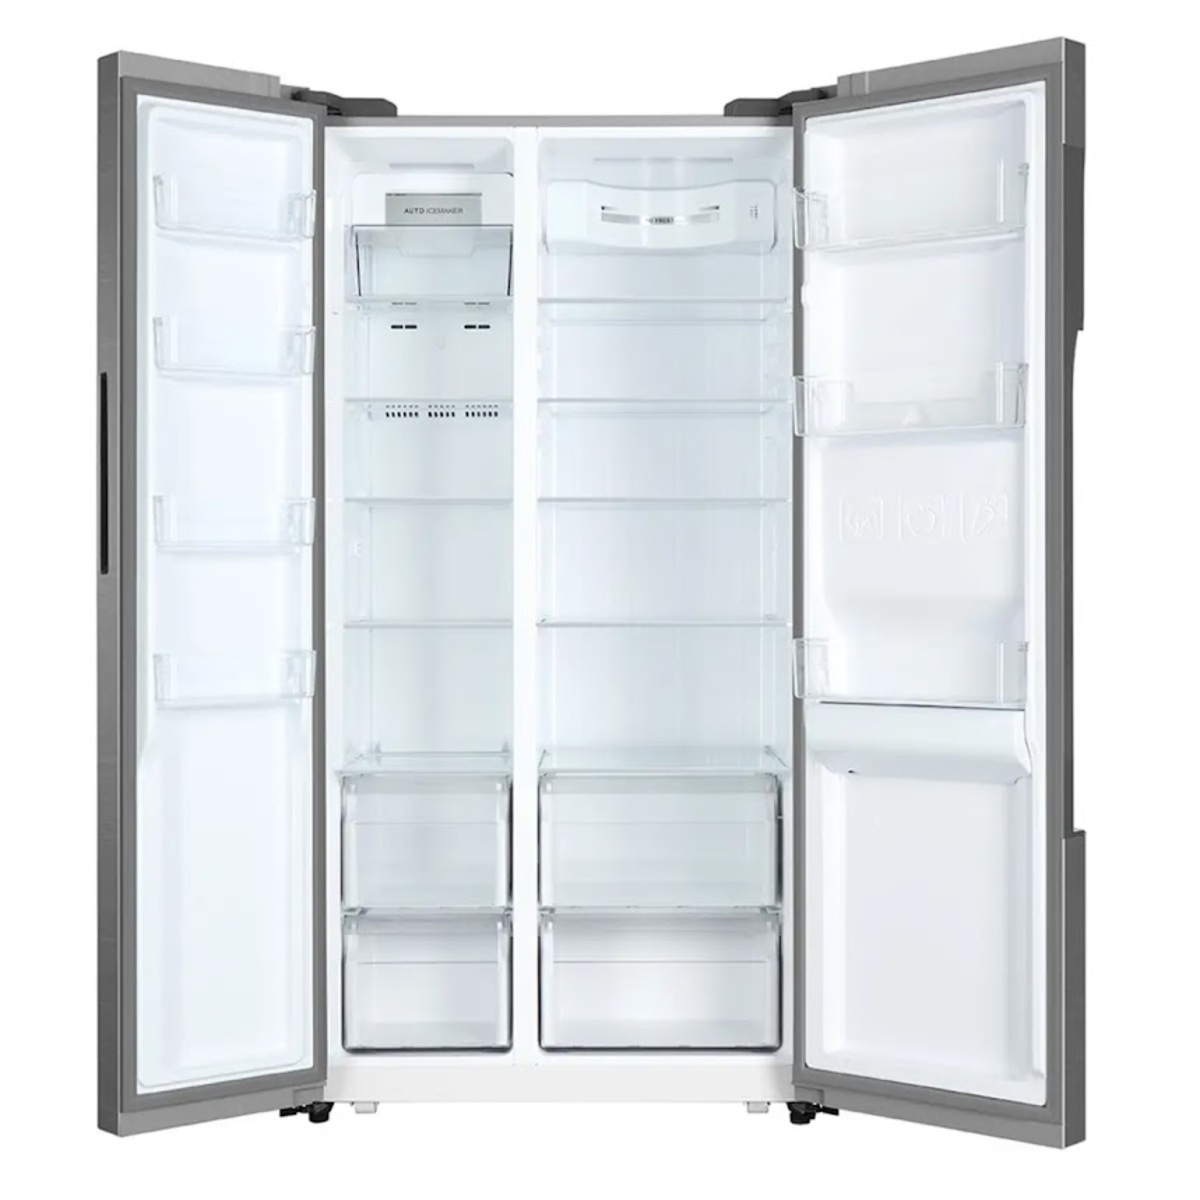 Refrigerador Side by Side 521 L (19 pies) Inoxidable Haier - HSM518HMNSS0, Refrigeradores, Refrigeradores y Congeladores